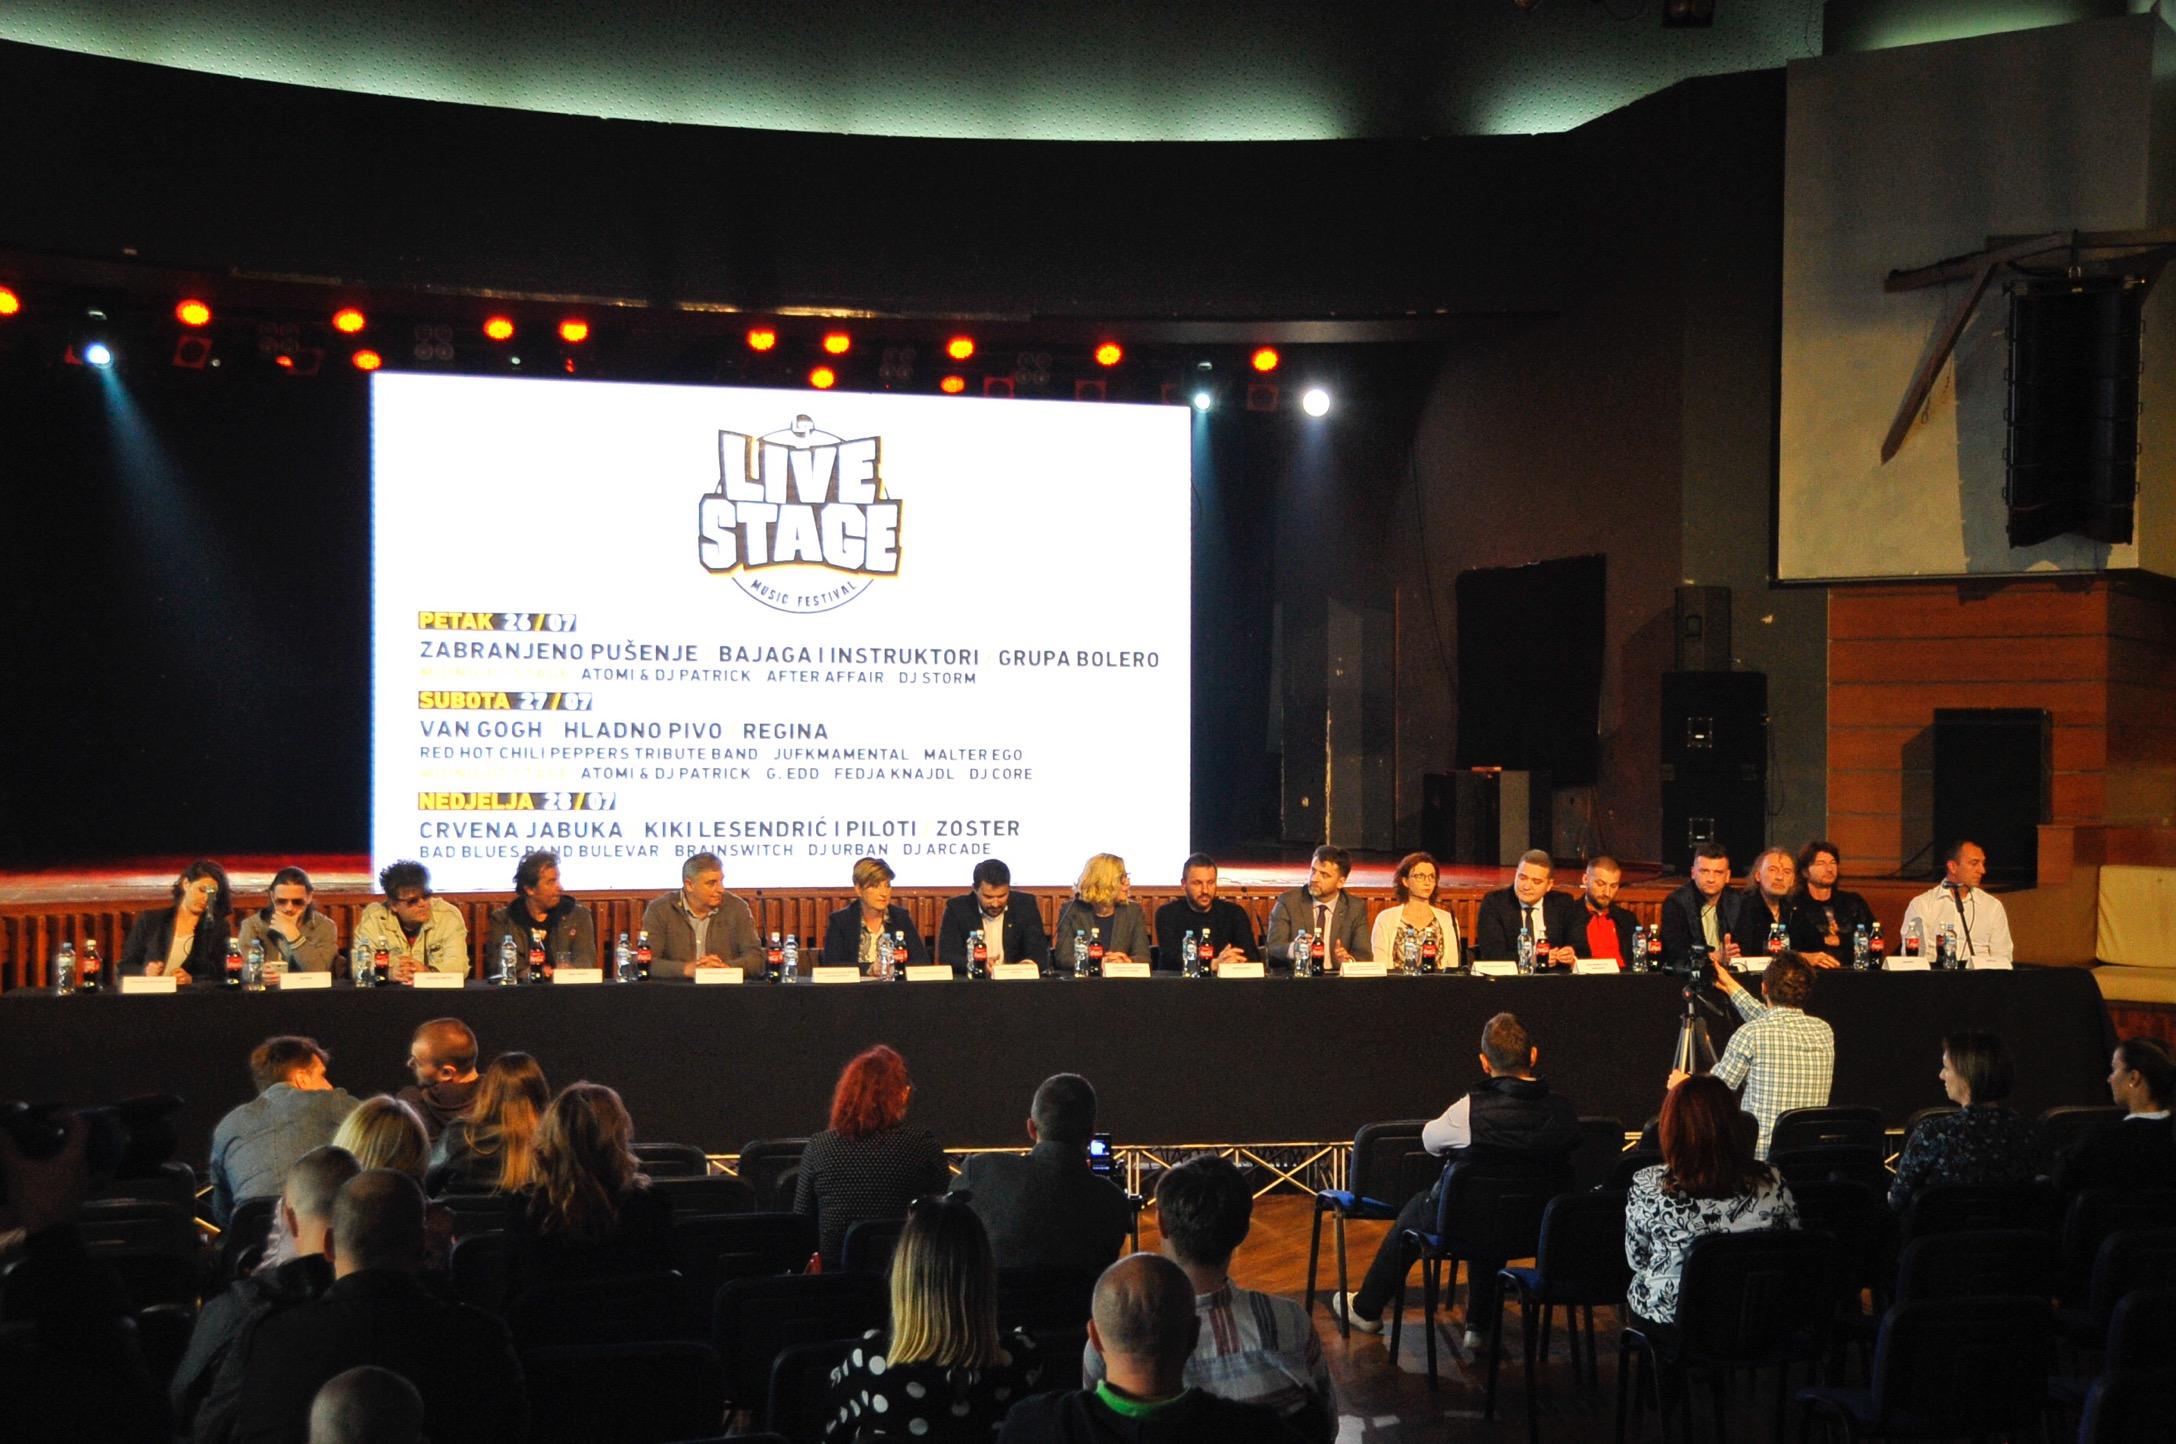 Predstavljen novi muzički festival "Live Stage" - Avaz